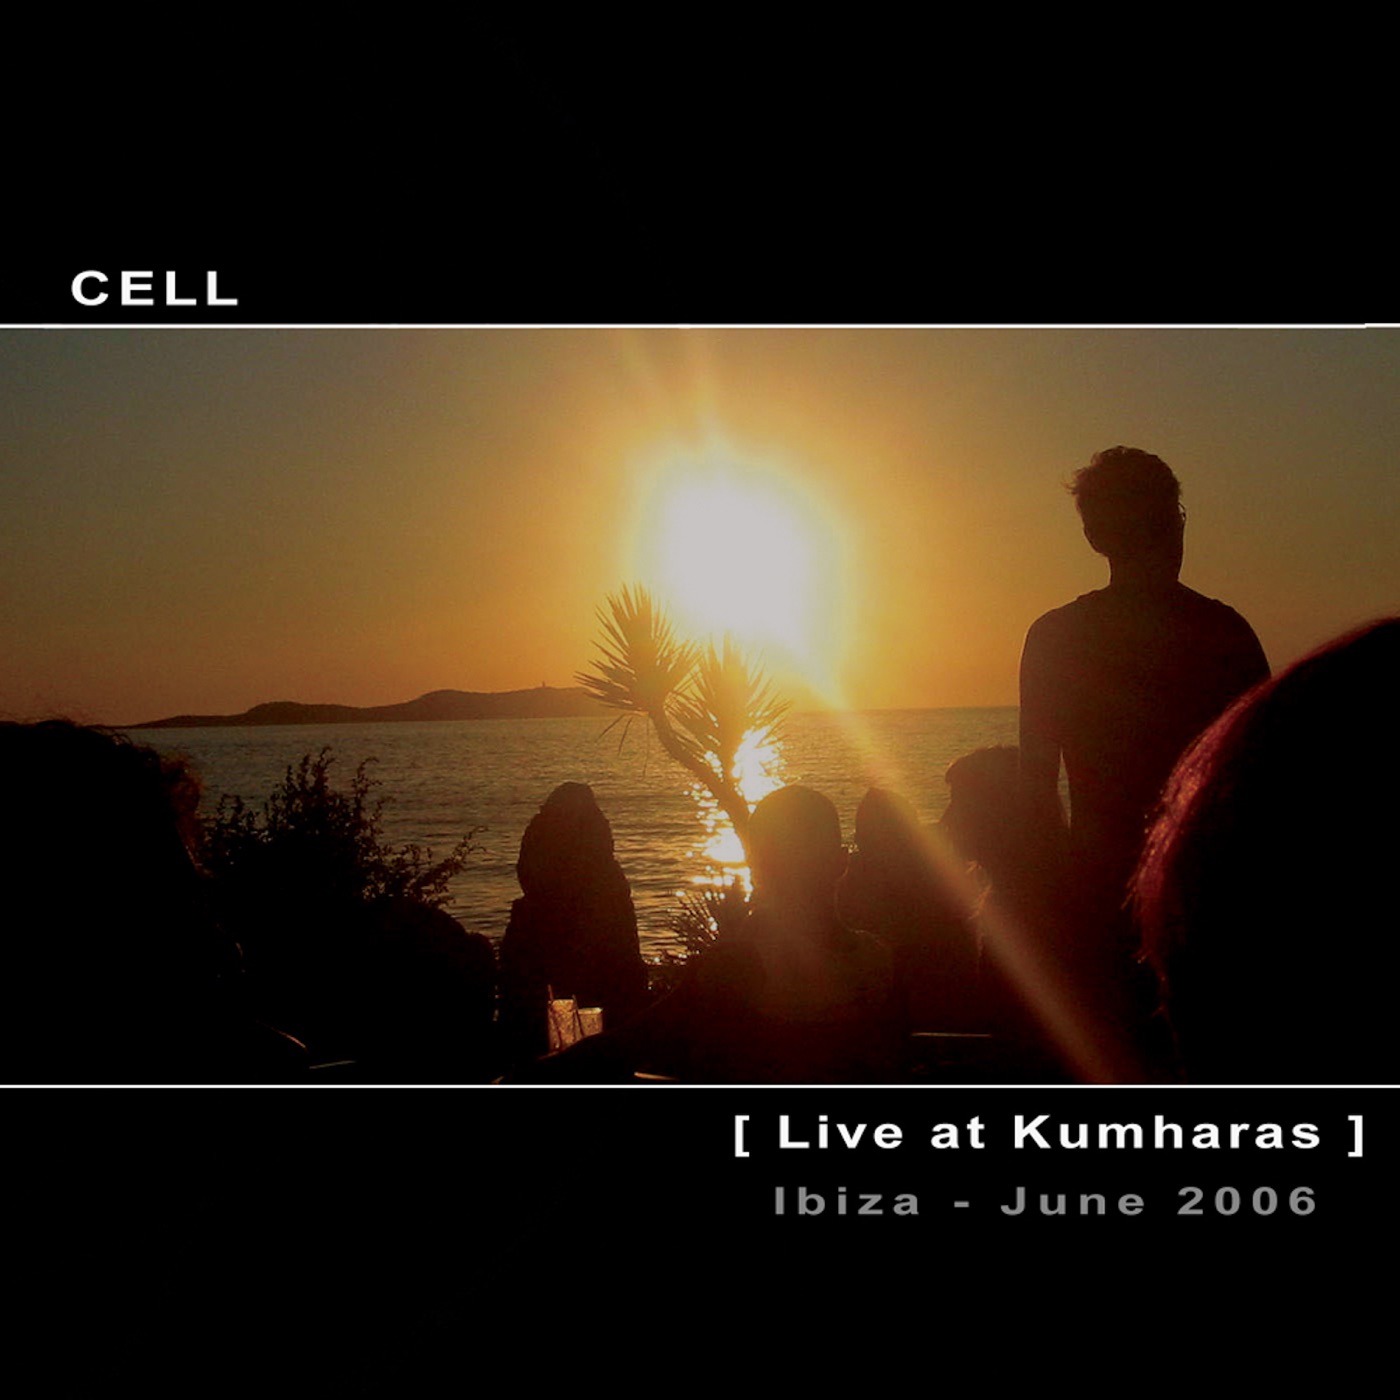 Live at Kumharas, Ibiza by Cell